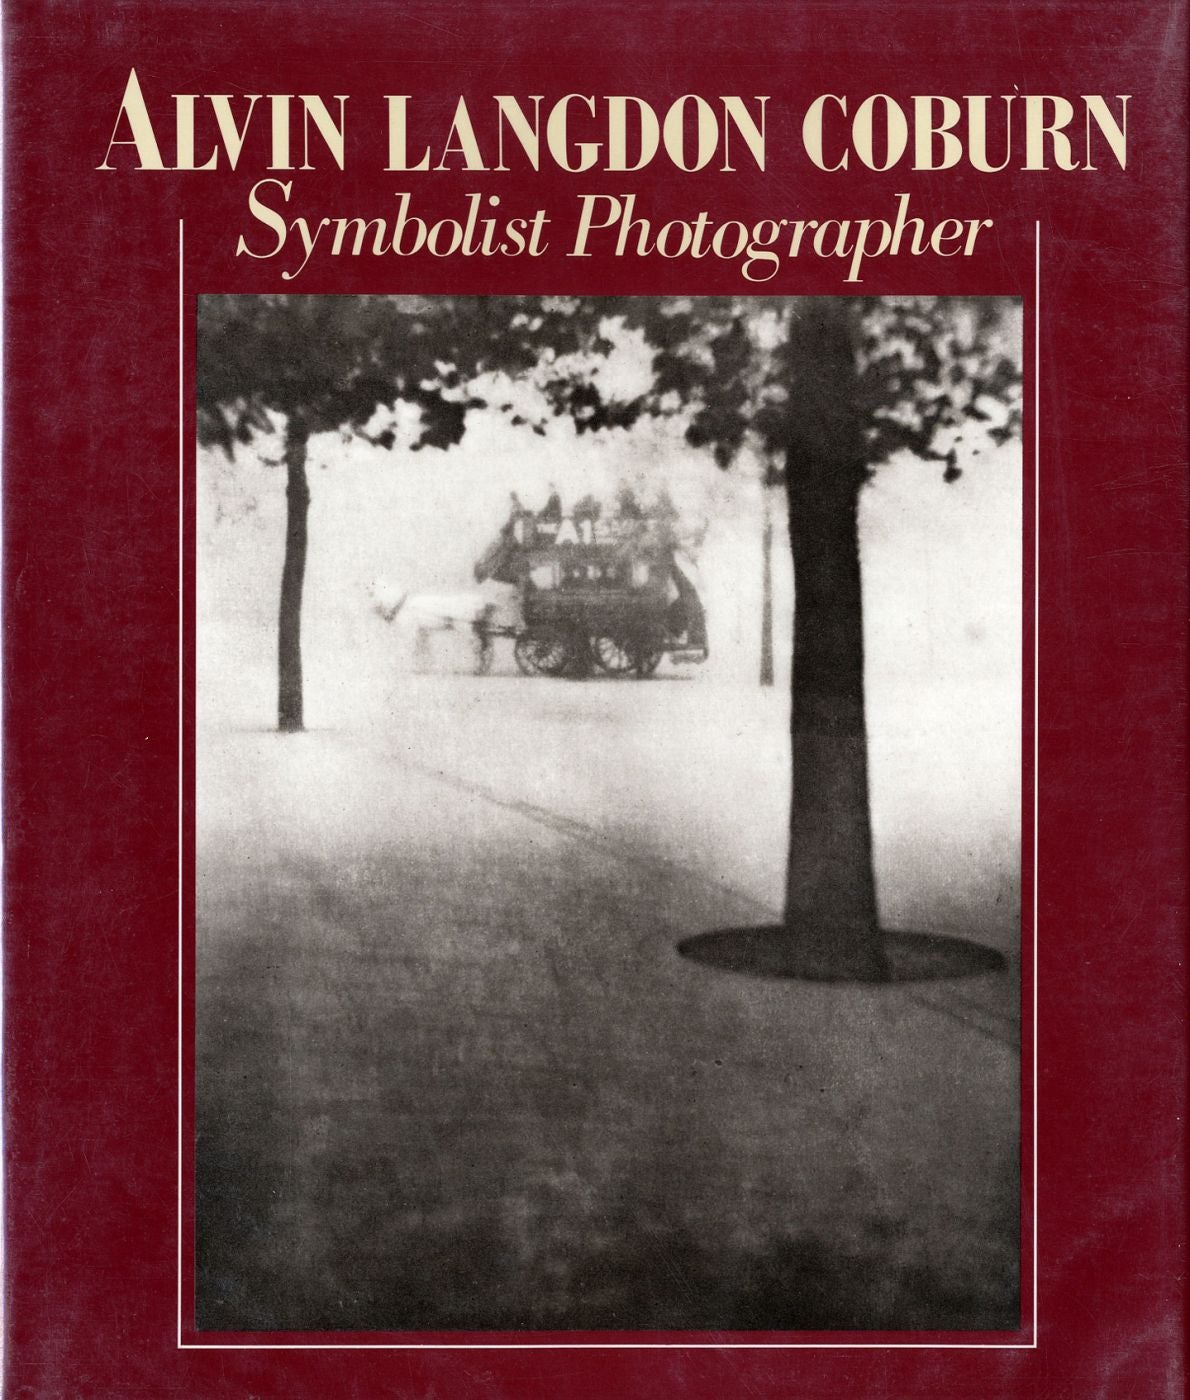 Alvin Langdon Coburn: Symbolist Photographer 1882-1966